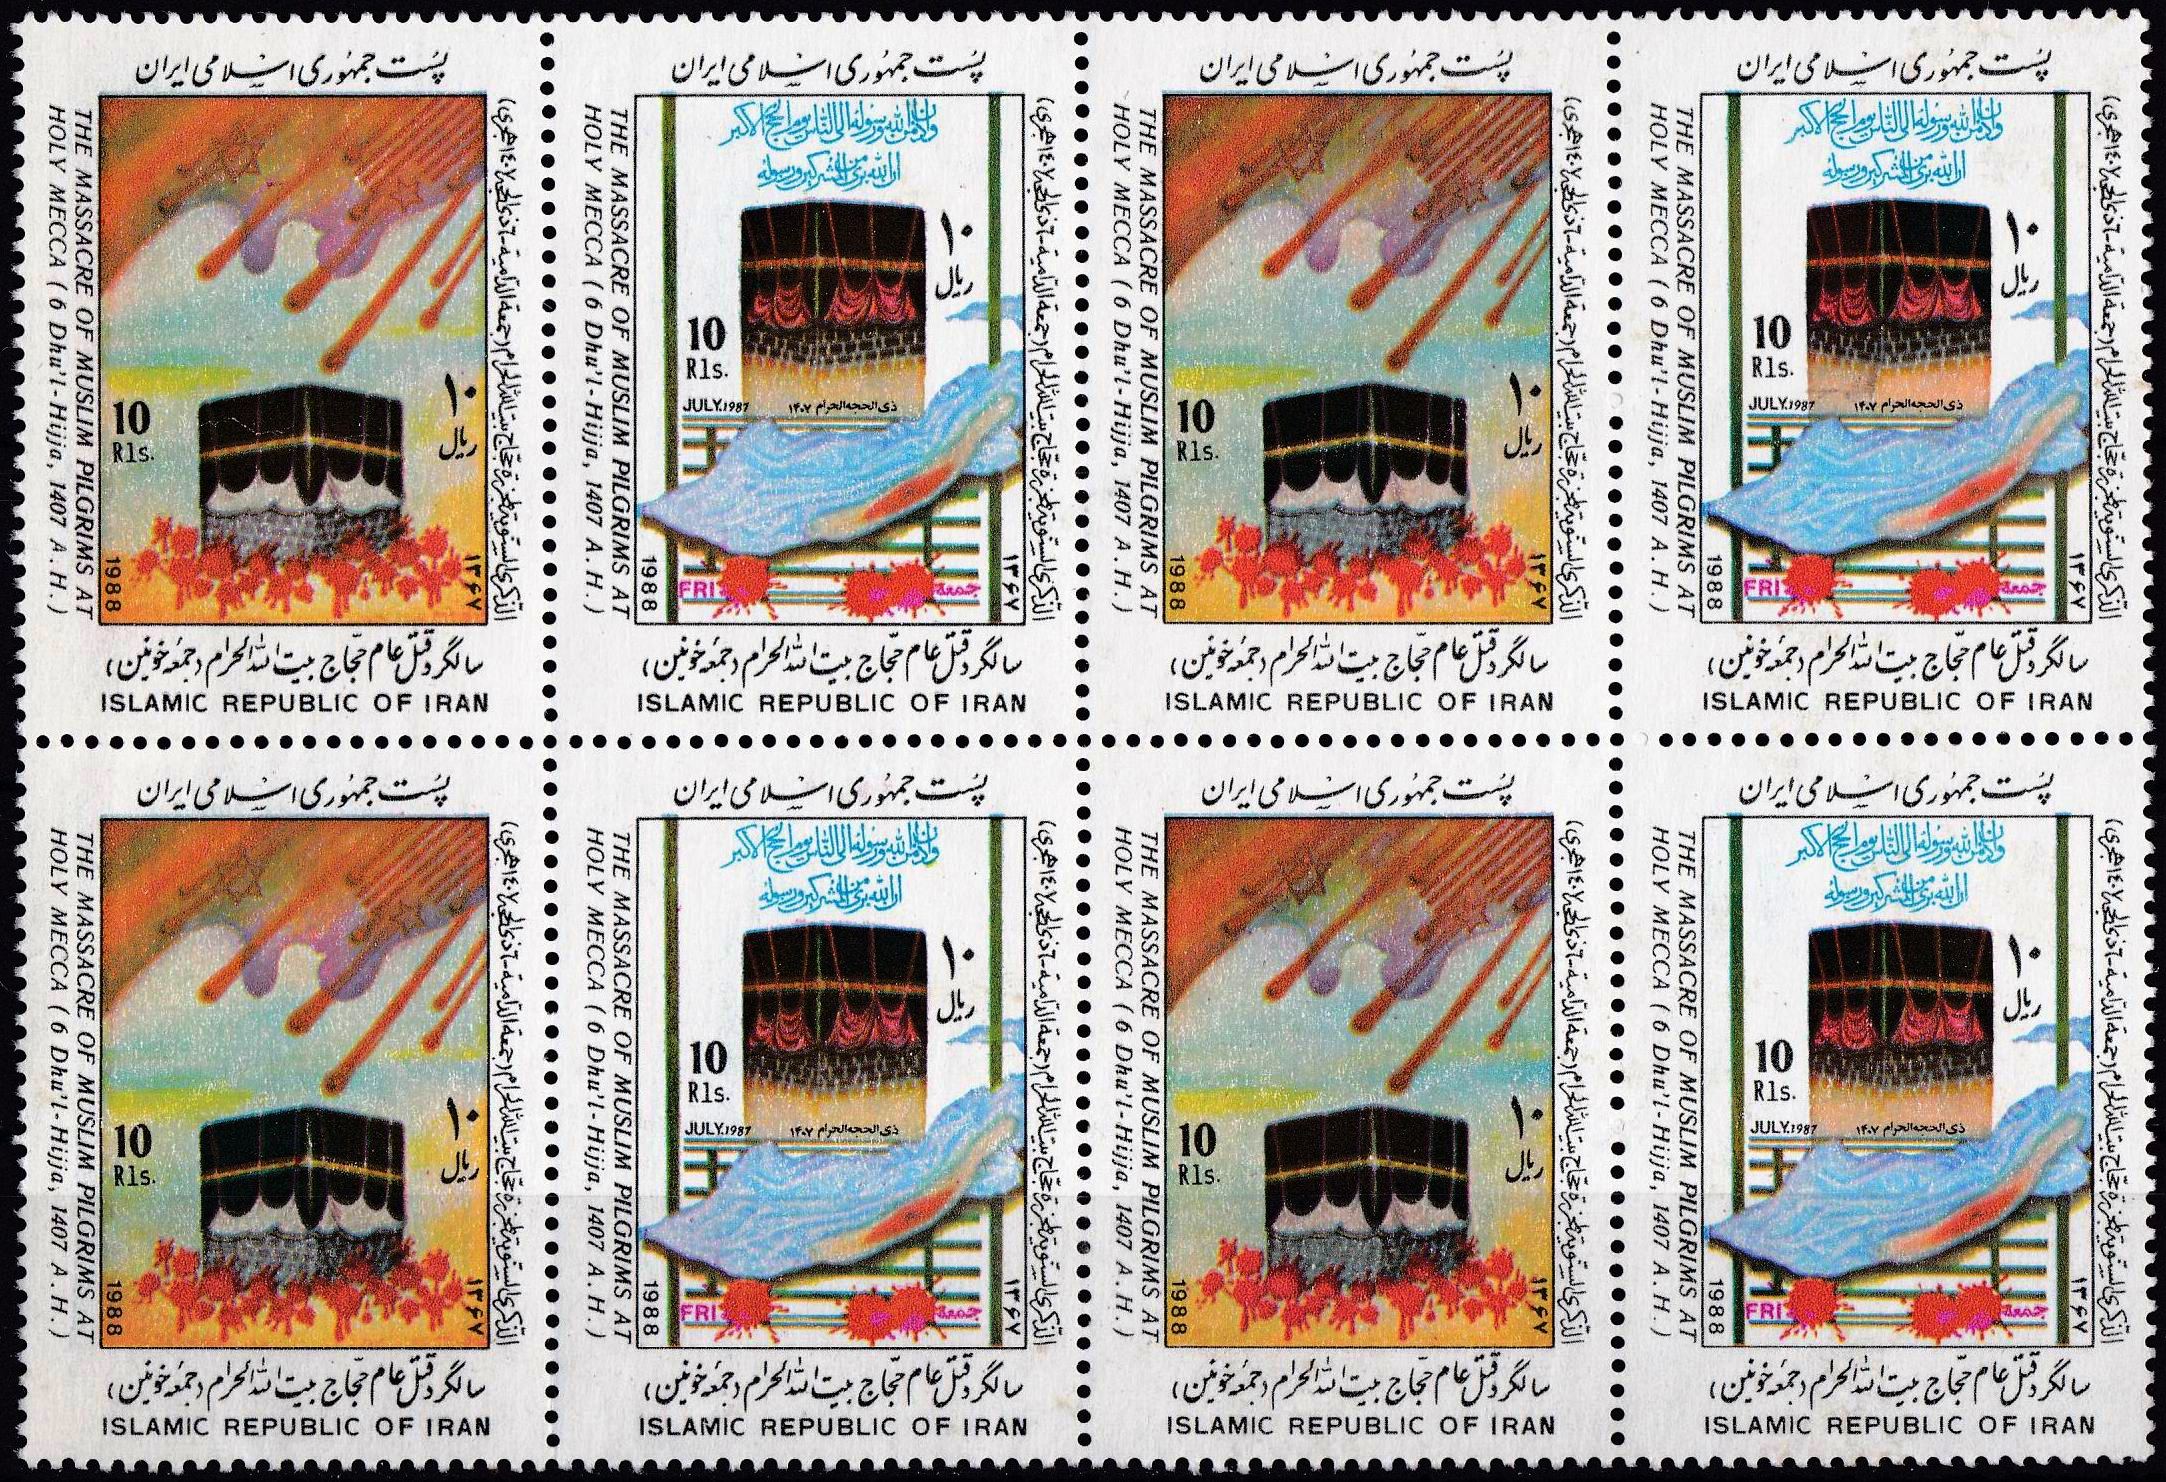 Iran 1988 Stamps Massacre Of Hajis In Mecca Khana e Kaaba MNH